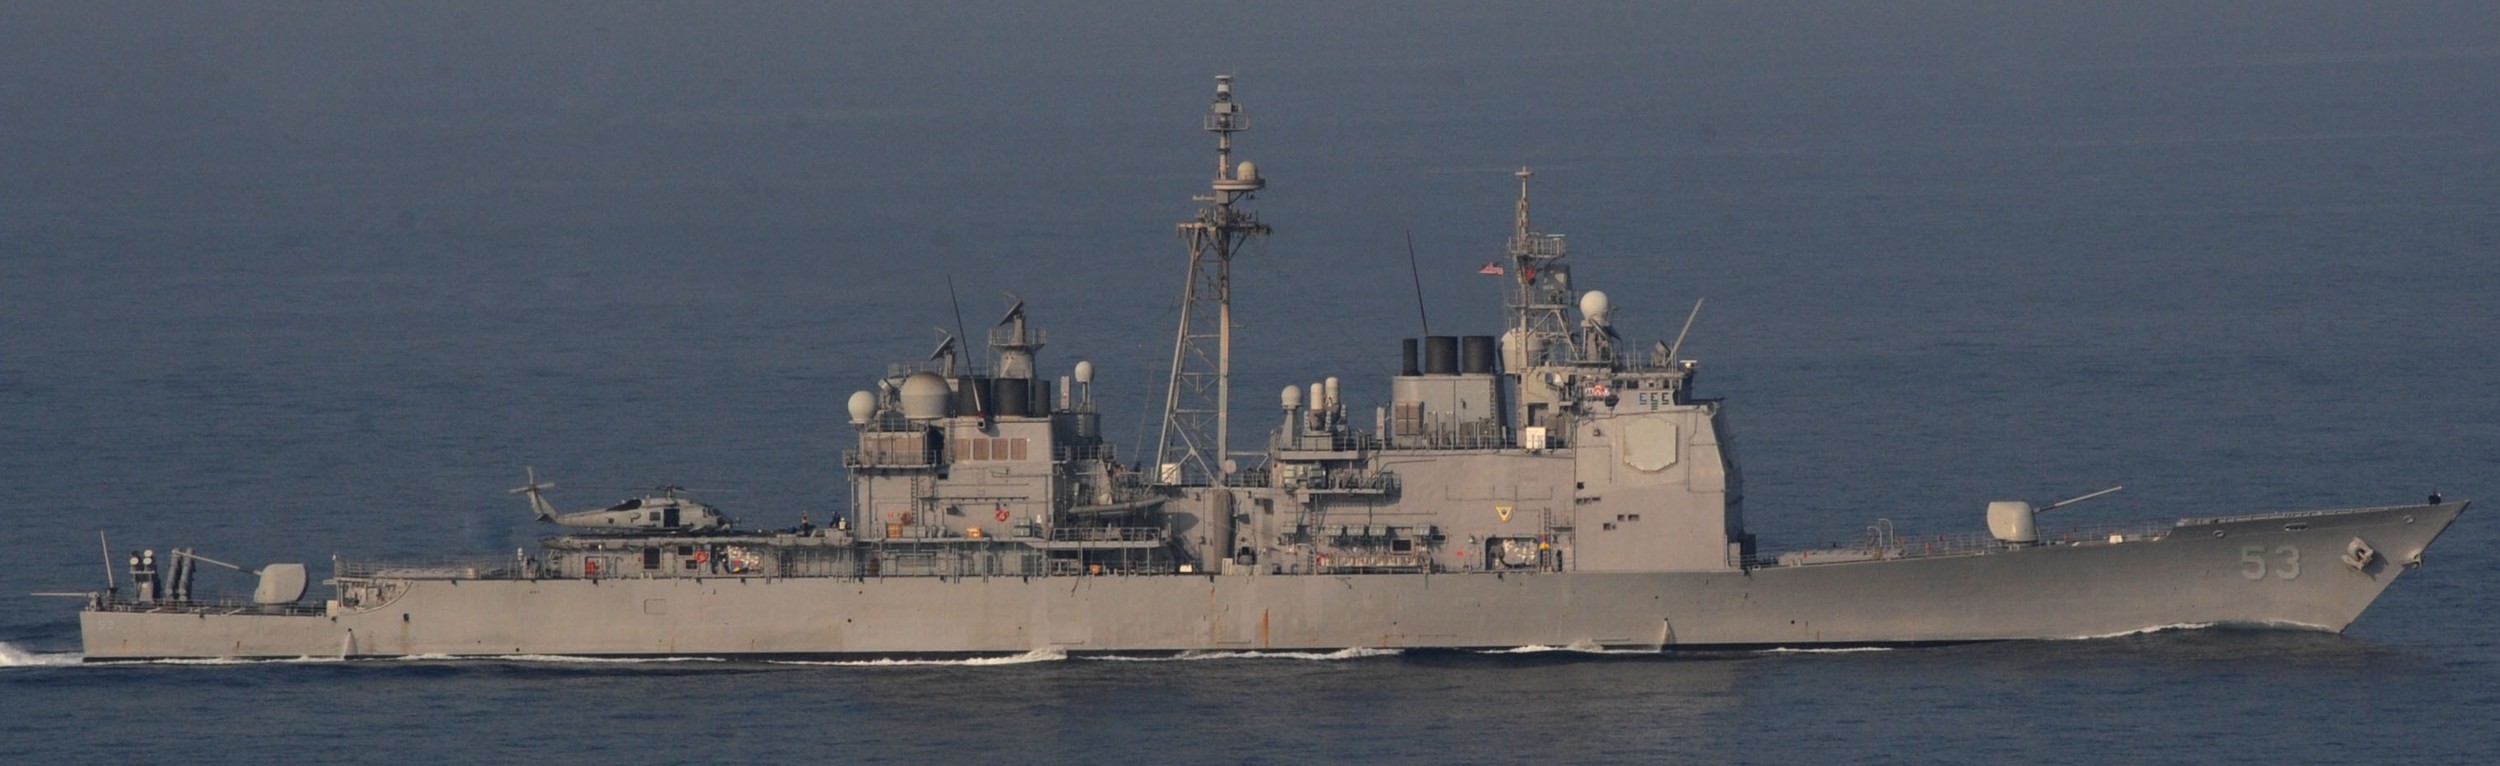 cg-53 uss mobile bay ticonderoga class guided missile cruiser aegis us navy persian gulf 48